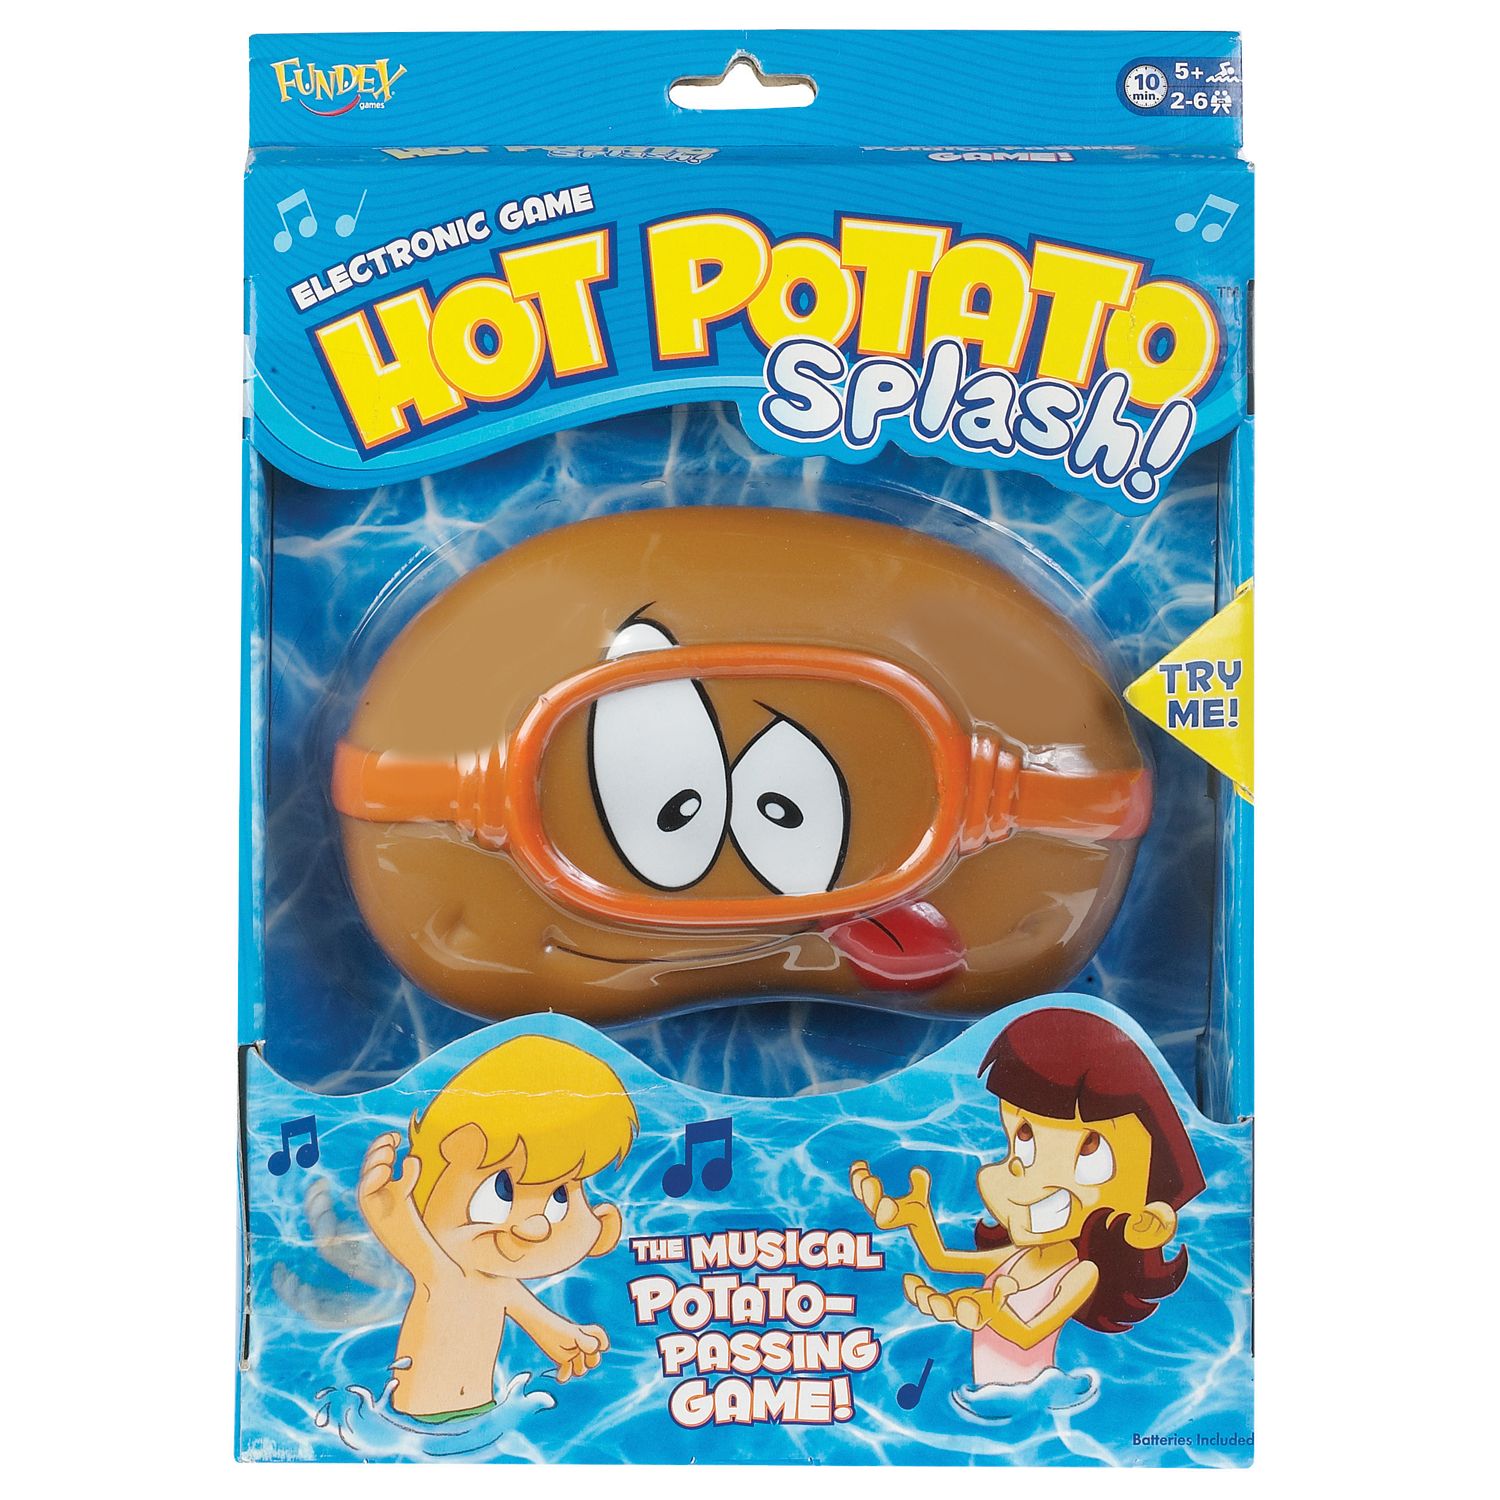 ideal hot potato game